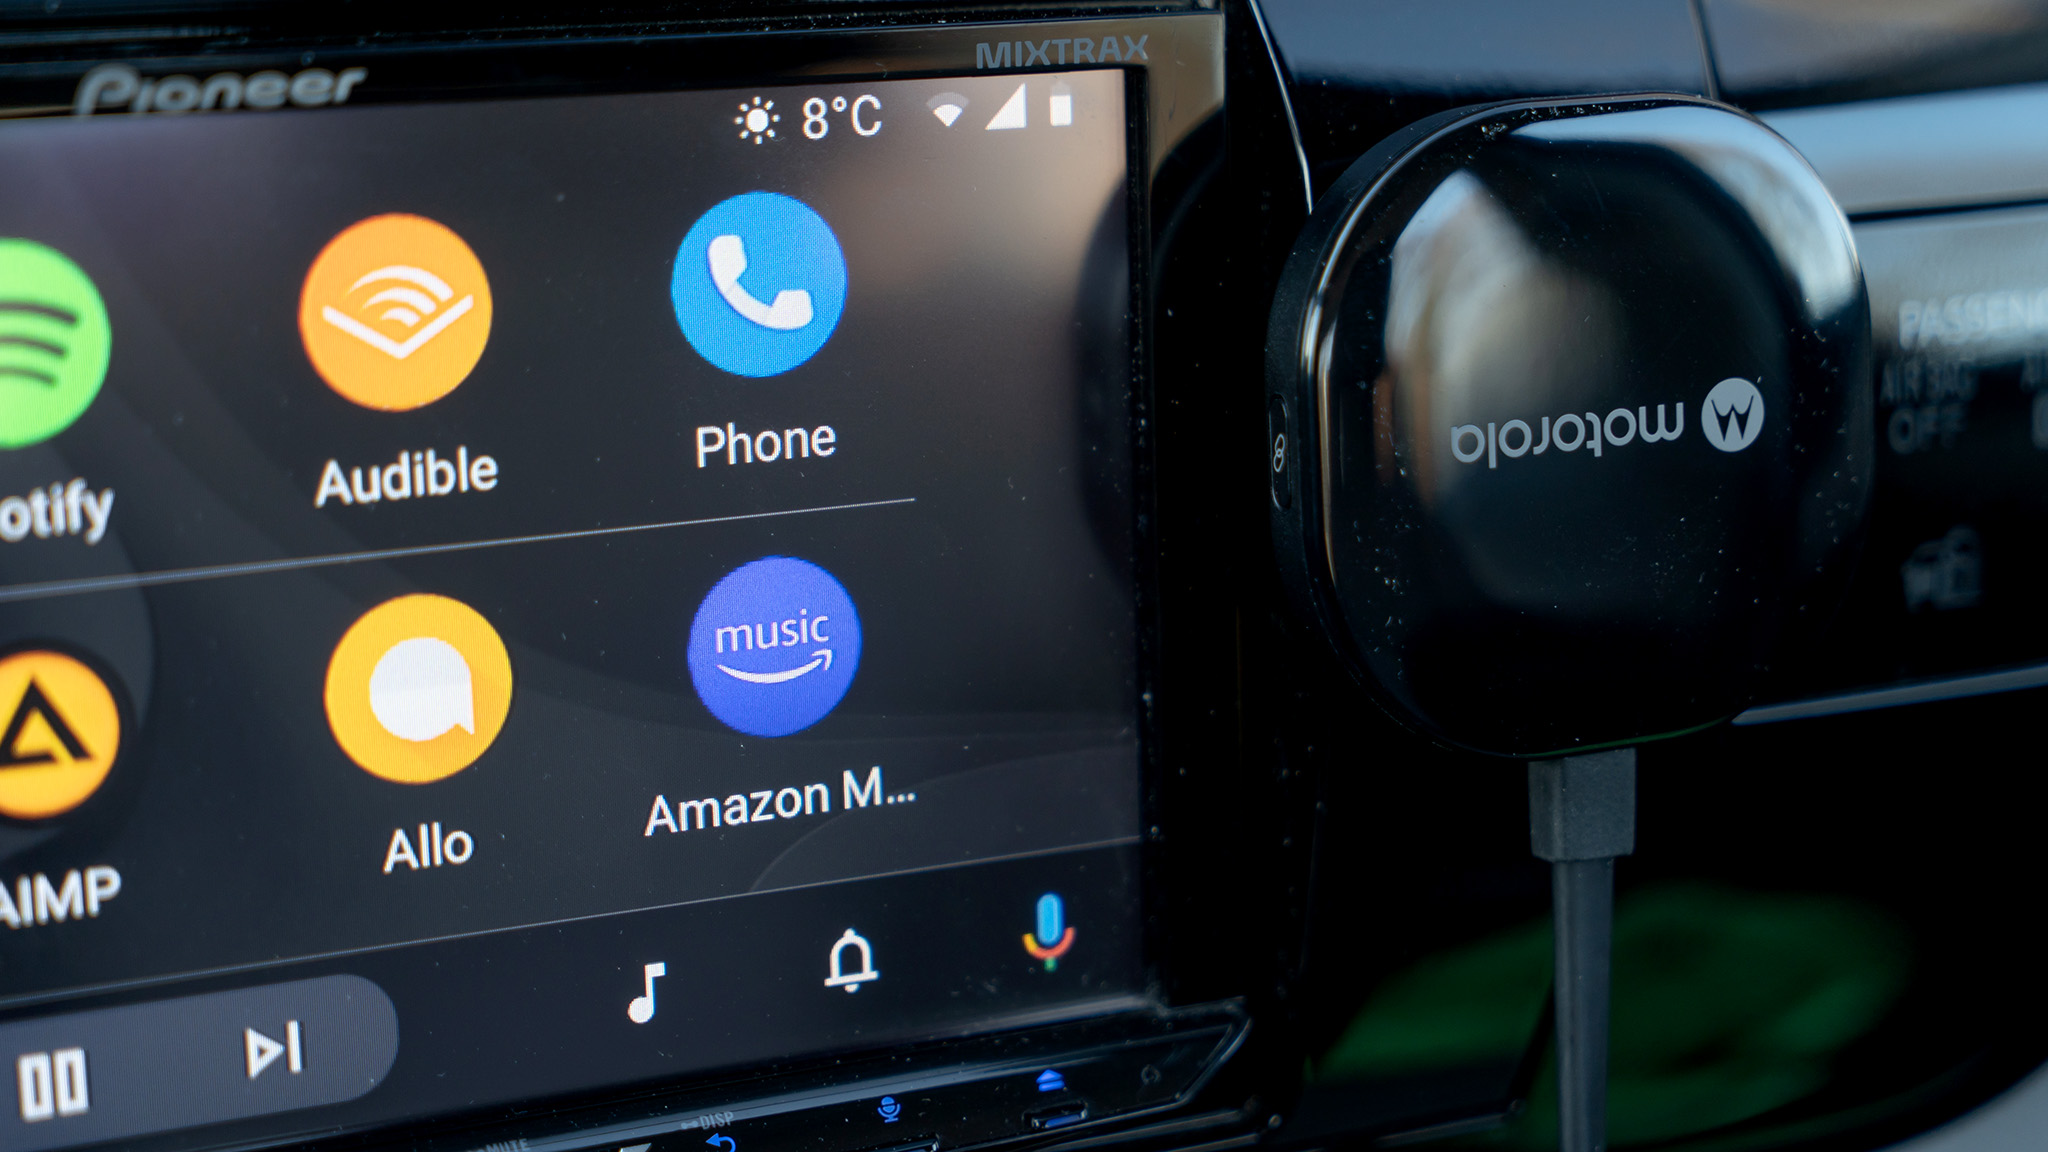 The Motorola MA1 next to Android Auto screen.